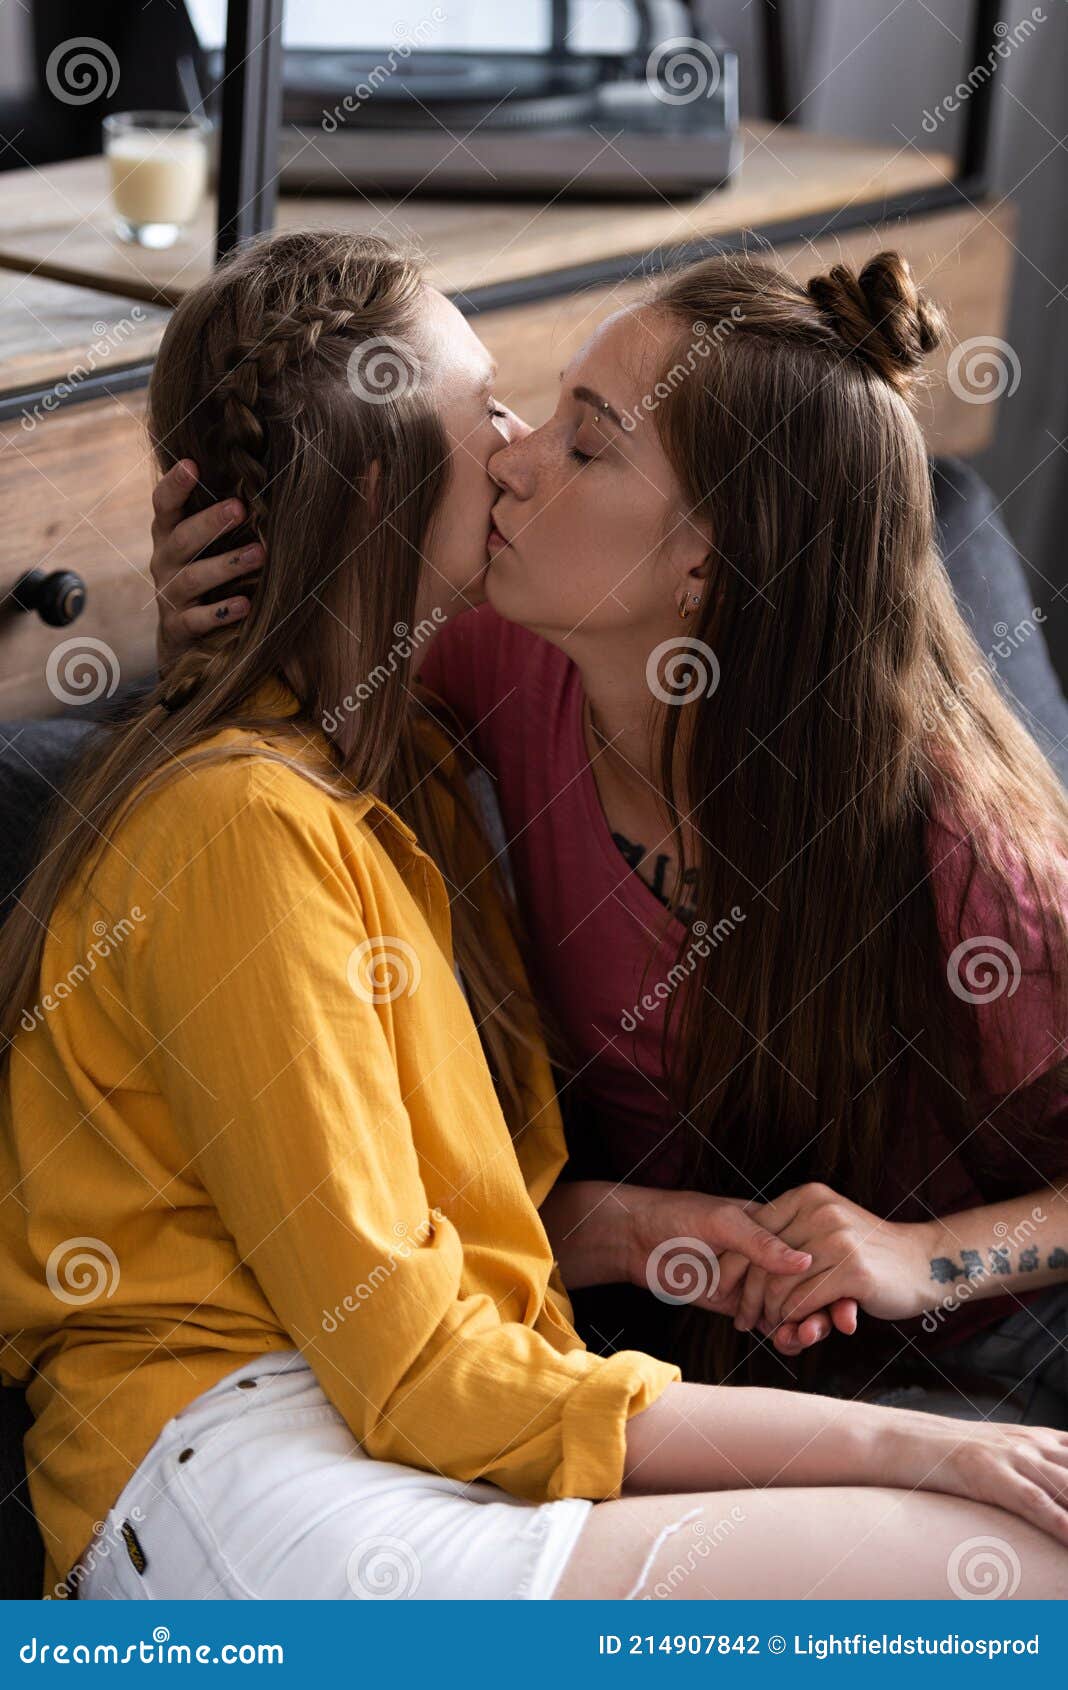 arpana chaudhari recommends Lesbians Kissing Images